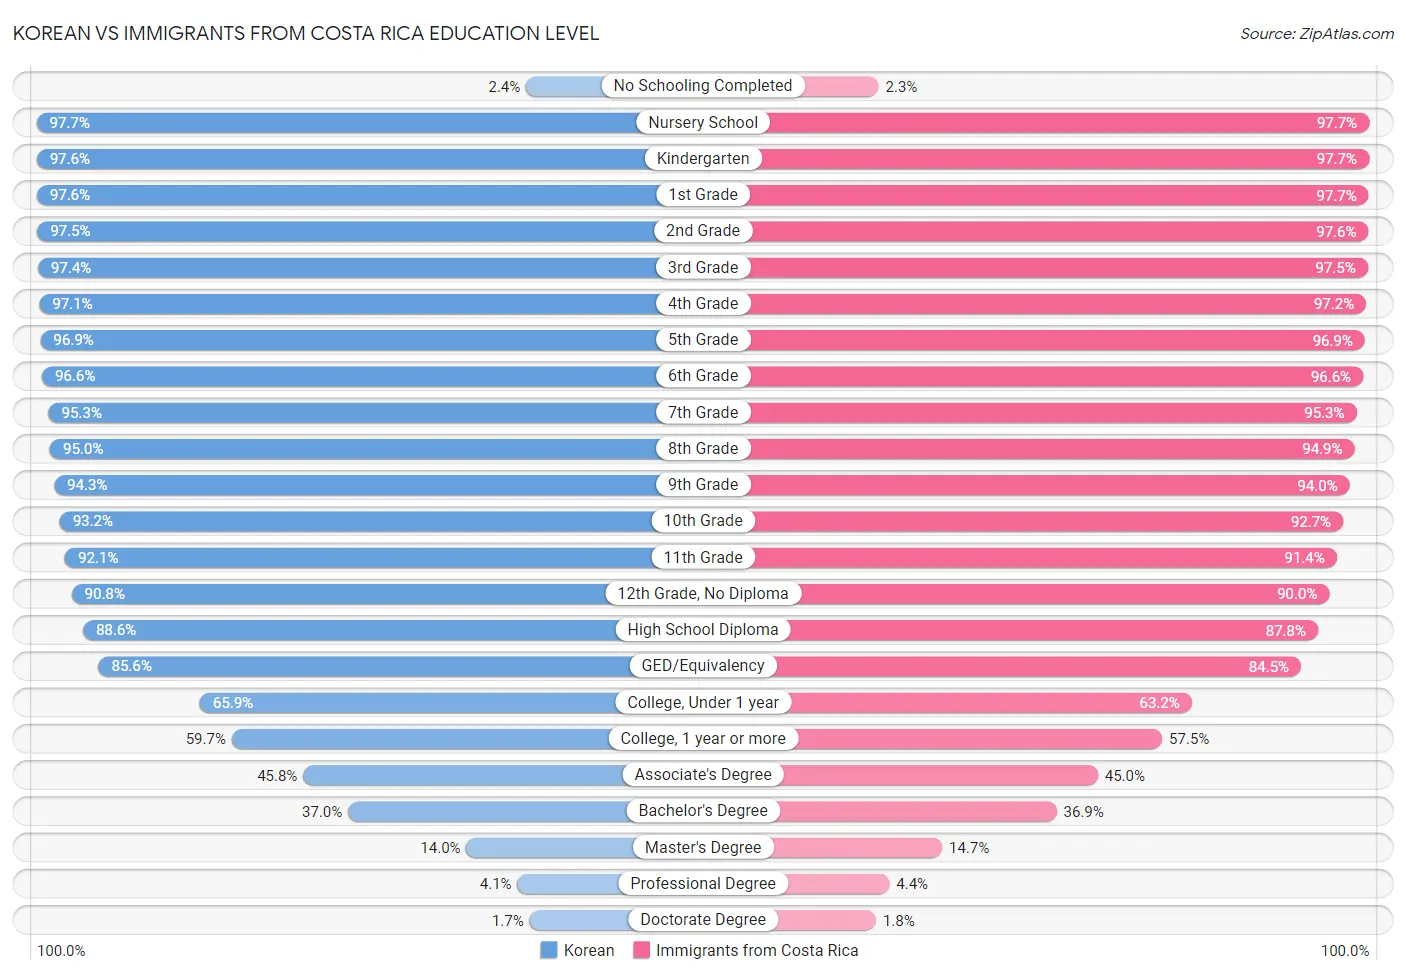 Korean vs Immigrants from Costa Rica Education Level